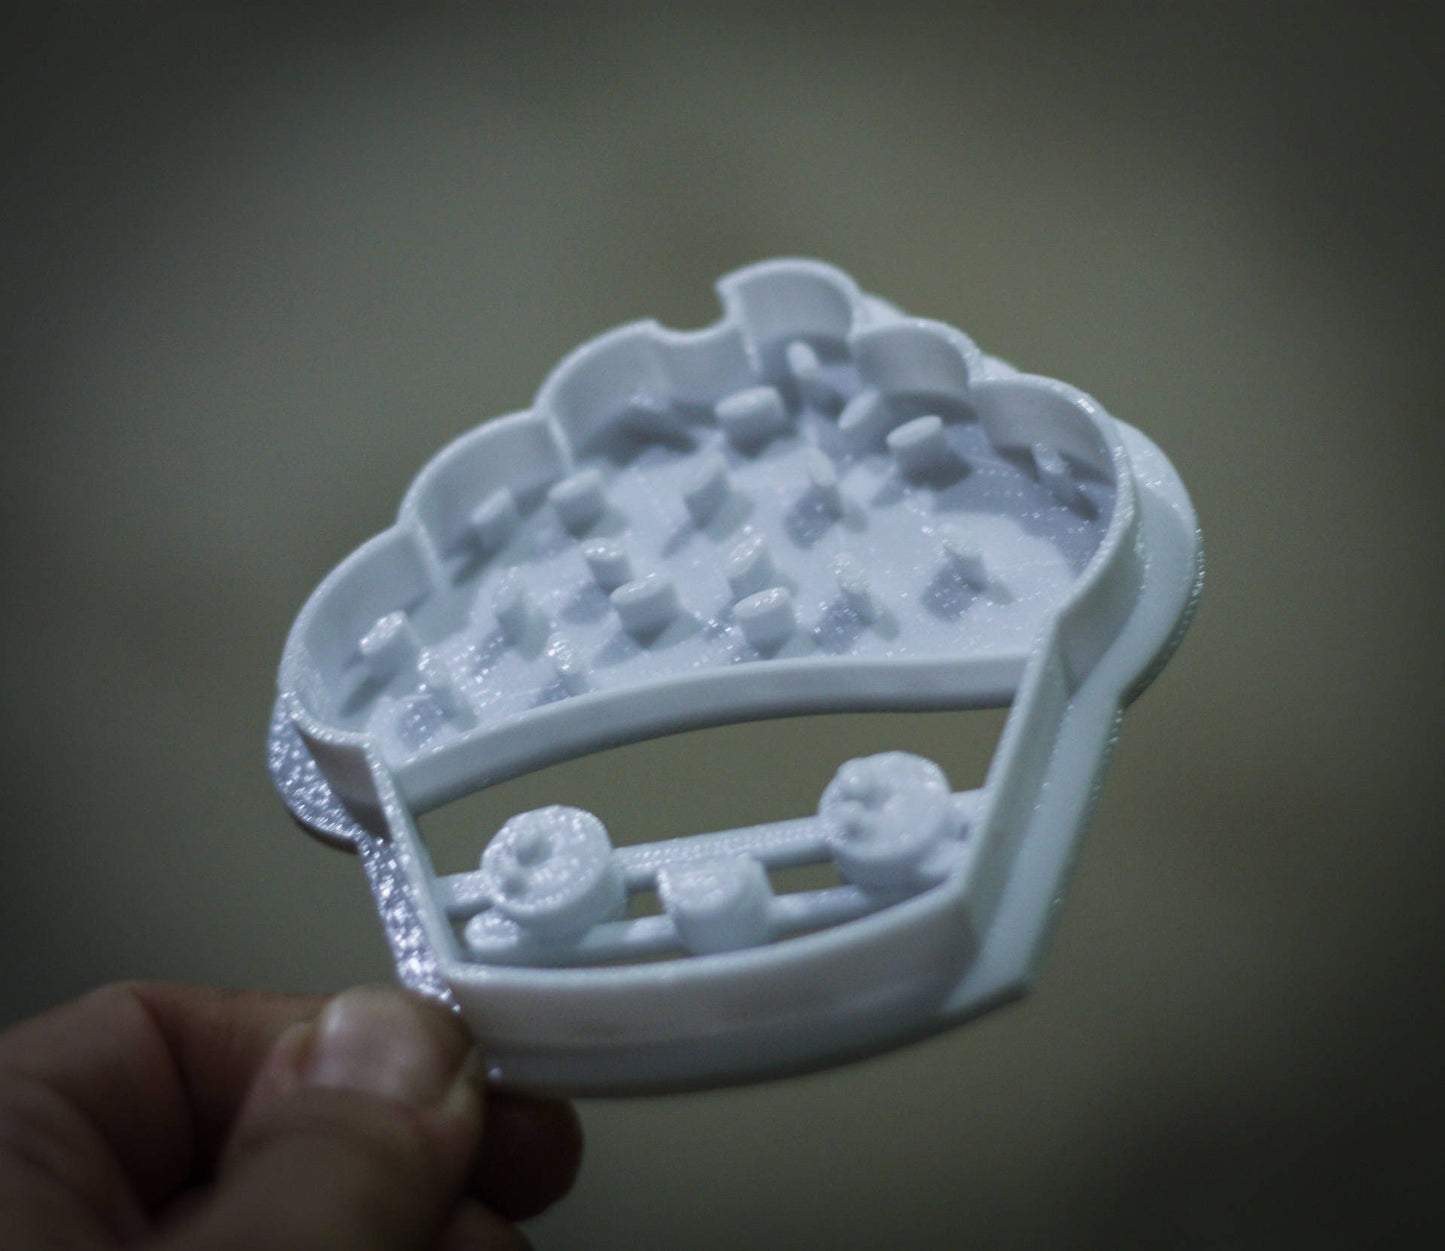 Kawaii muffin cookie cutter for cupcake party - 3DPrintProps